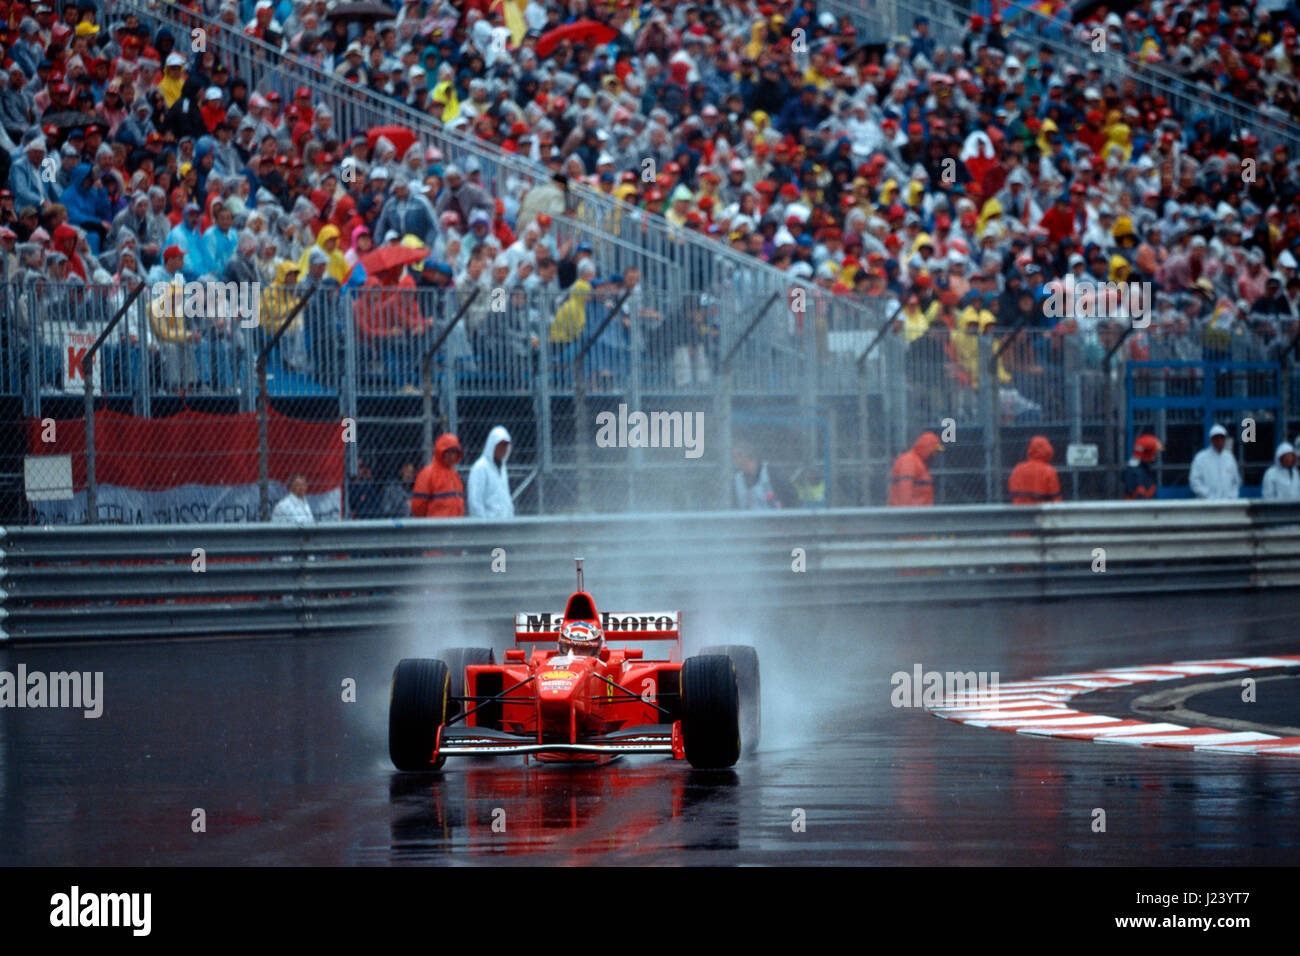 F1, Ferrari, Michael Schumacher, Gp Monaco, 1997 Stock Photo